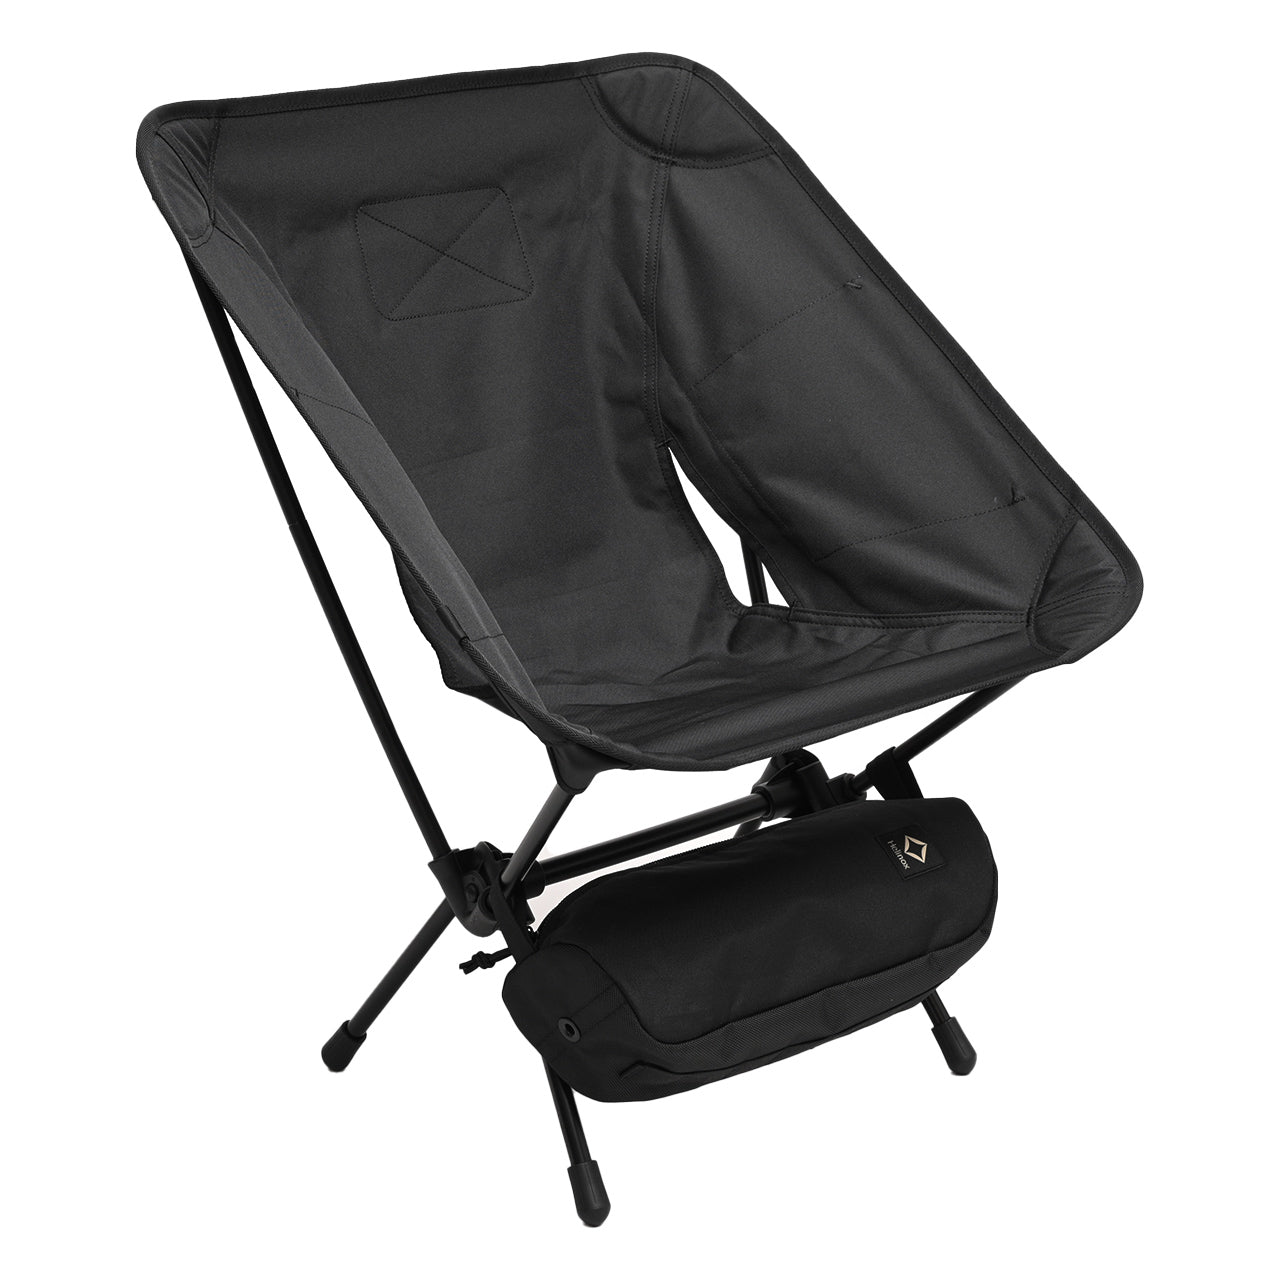 Helinox ヘリノックス タクティカルチェア 折りたたみ式 イス 椅子 Tactical Chair 19755001001001 19755001017001【送料無料】